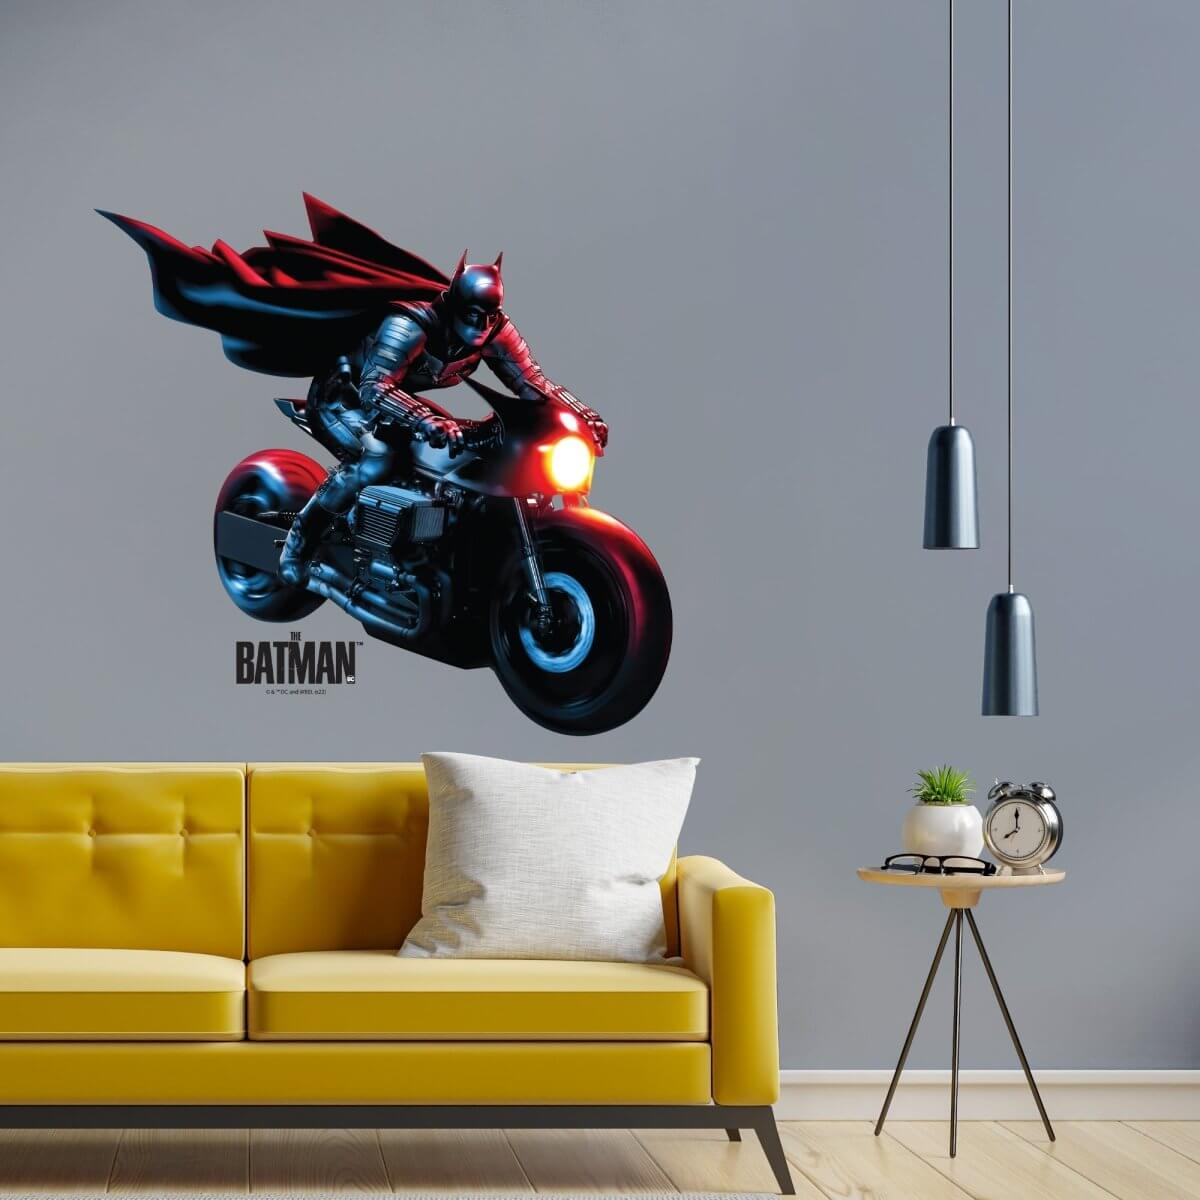 Kismet Decals The Batman 2022 & Batcycle Licensed Wall Sticker - Easy DIY Home & Kids Room Decor Wall Decal Art - Kismet Decals